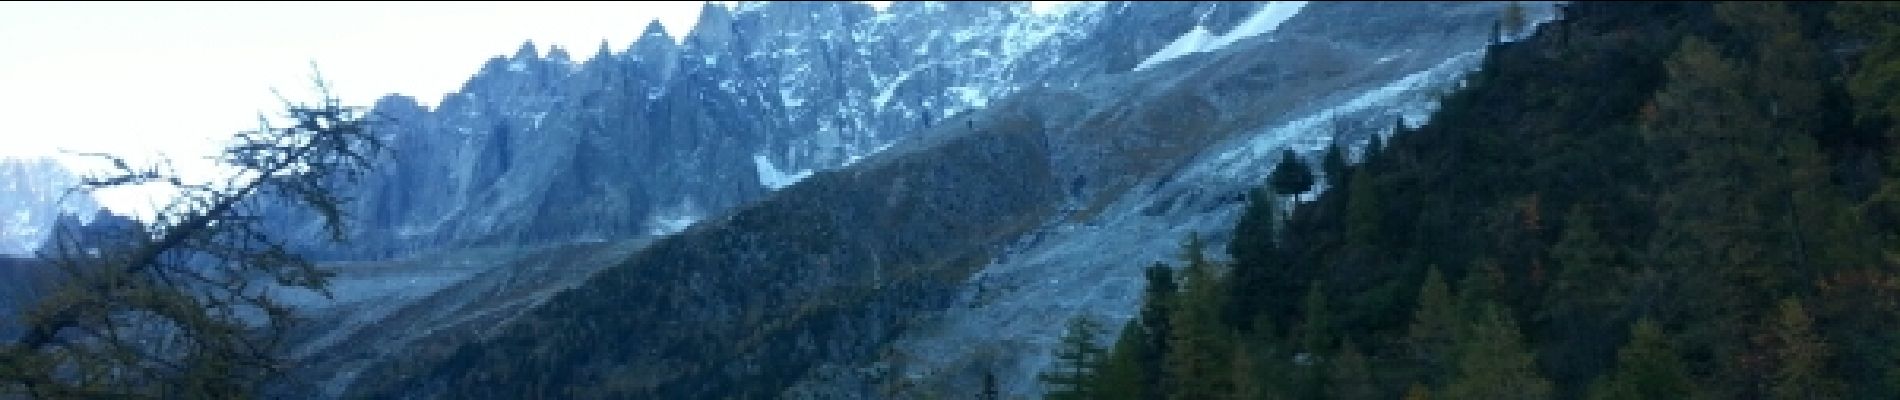 POI Chamonix-Mont-Blanc - passage à 1800 m  - Photo